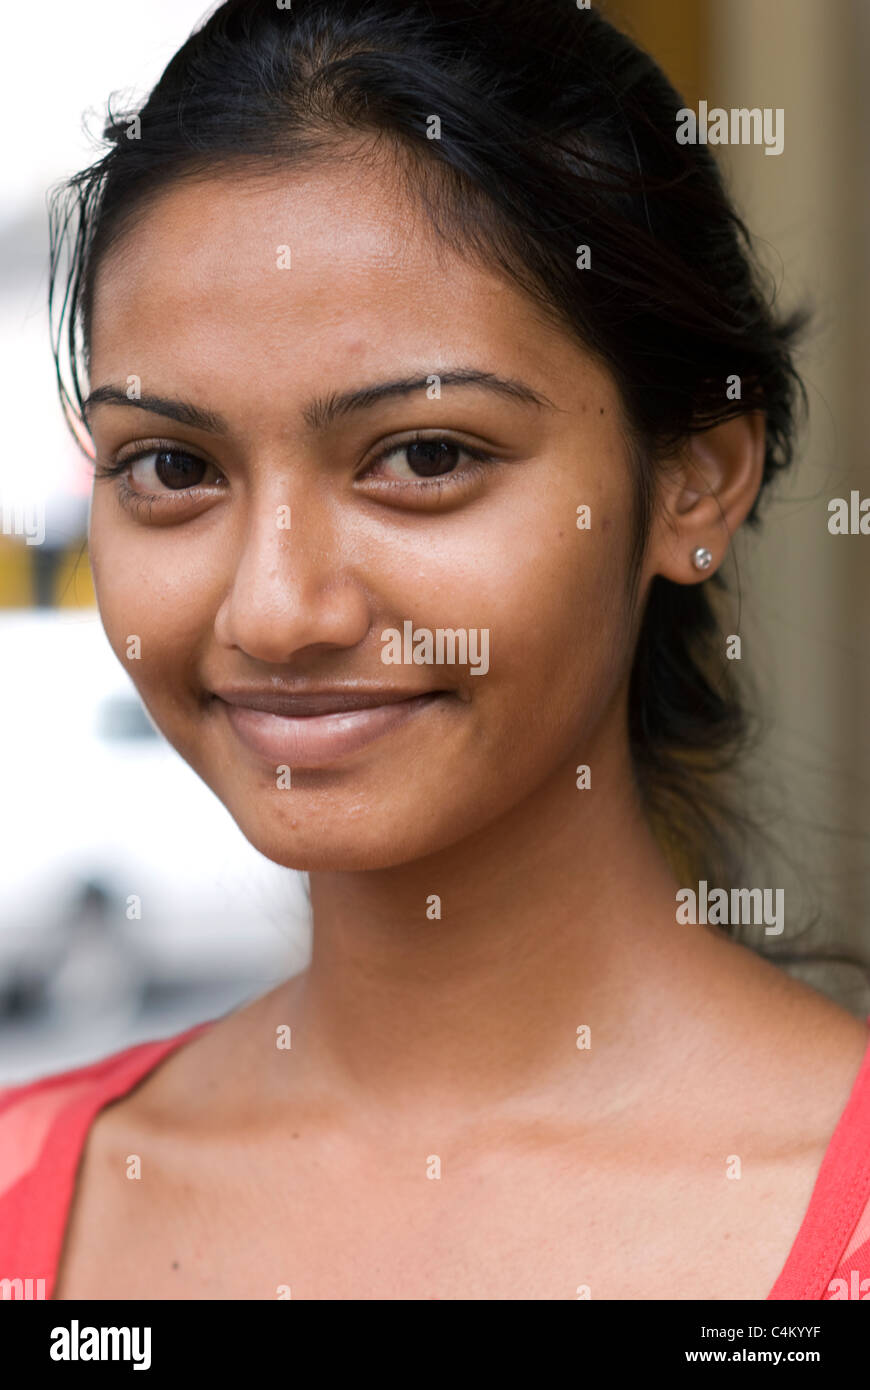 young woman suva Fiji Stock Photo - Alamy